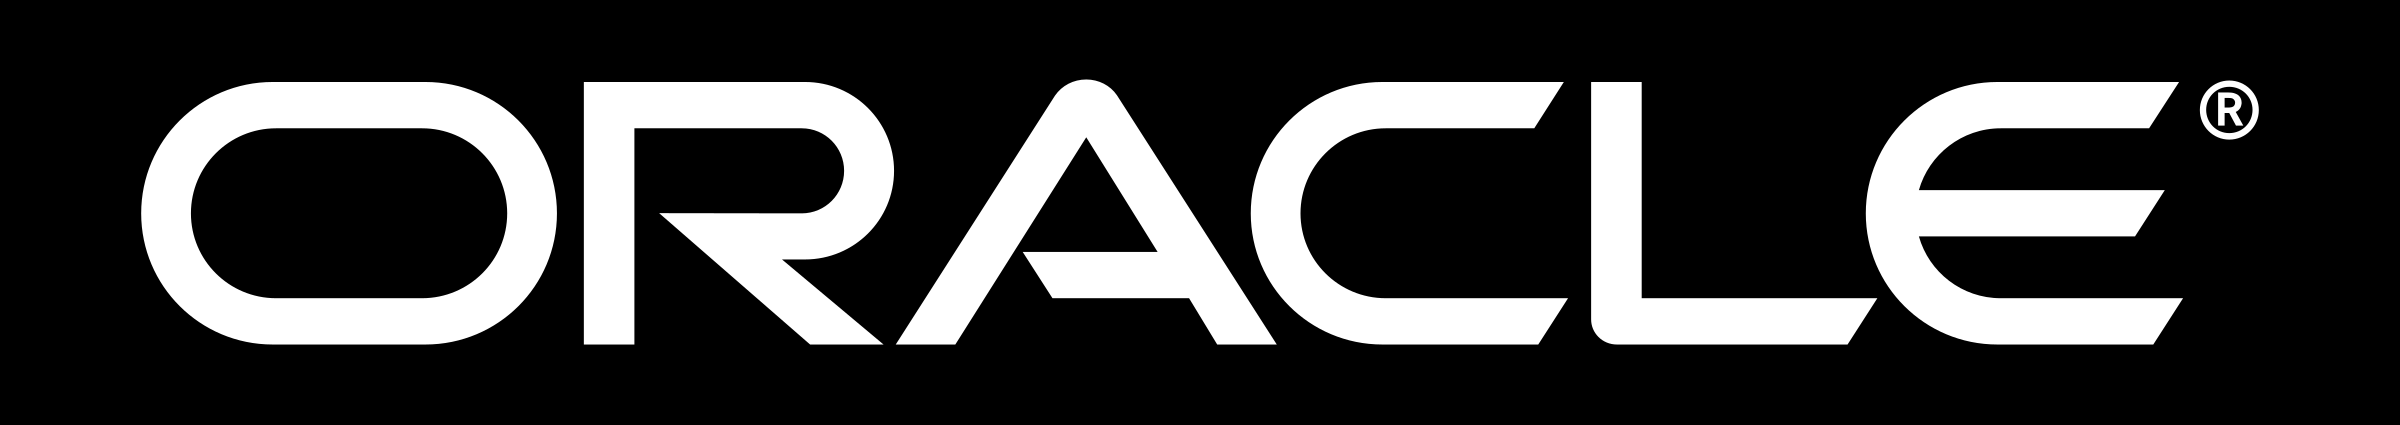 Black Oracle Logo - Oracle Logo PNG Transparent & SVG Vector - Freebie Supply